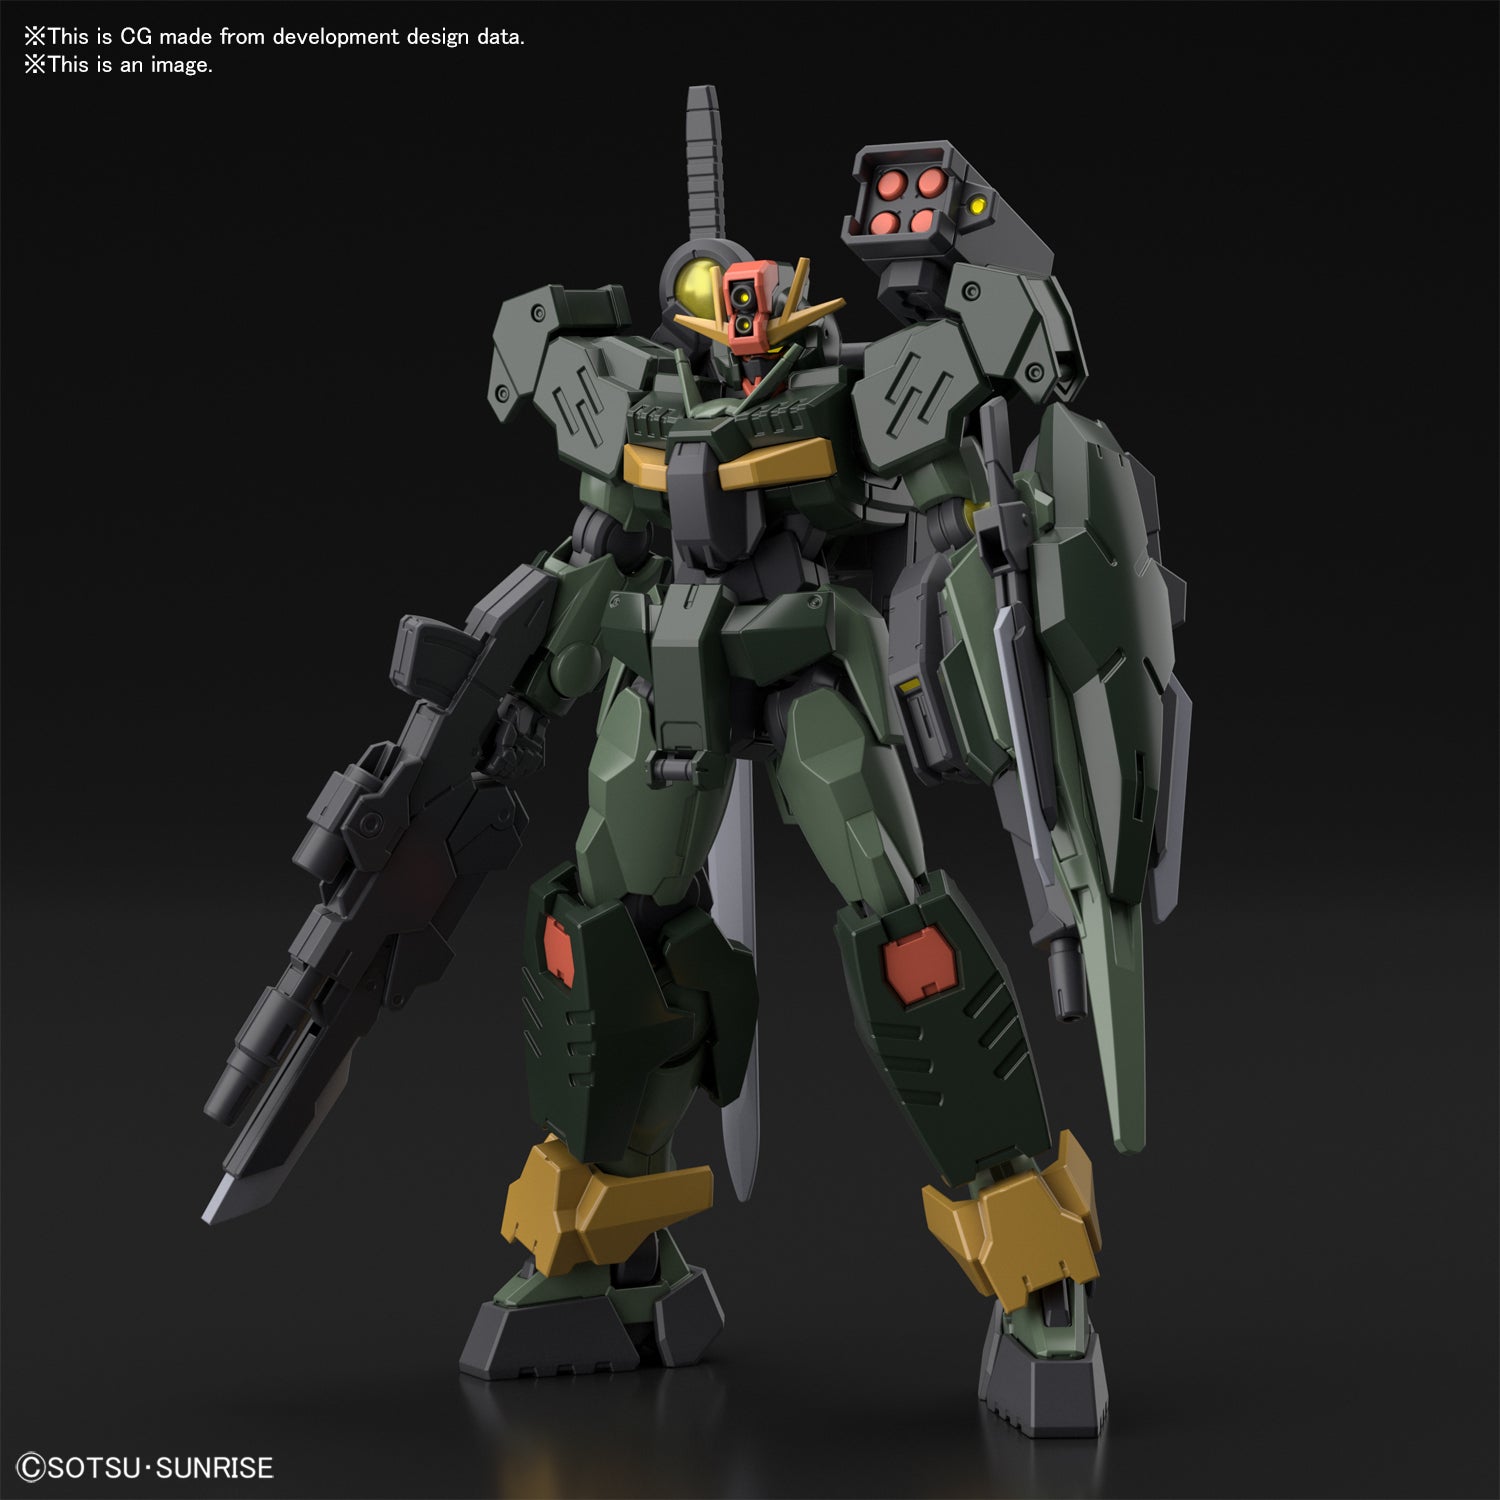 HG Gundam 00 Command Qan[T] 1/144